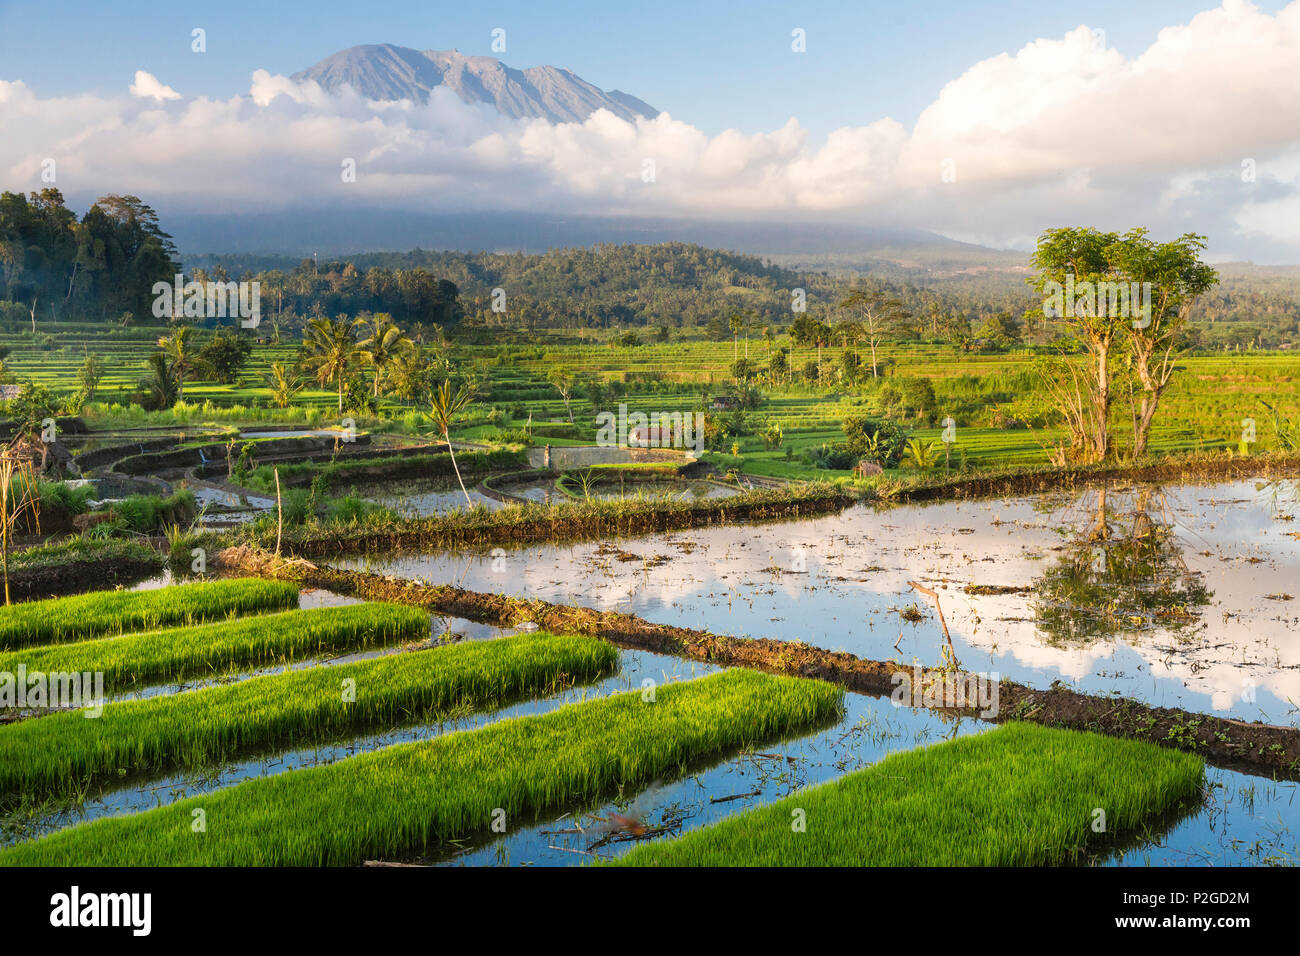 Tropical scenery with paddy fields, Gunung Agung, near Sidemen, Bali, Indonesia Stock Photo